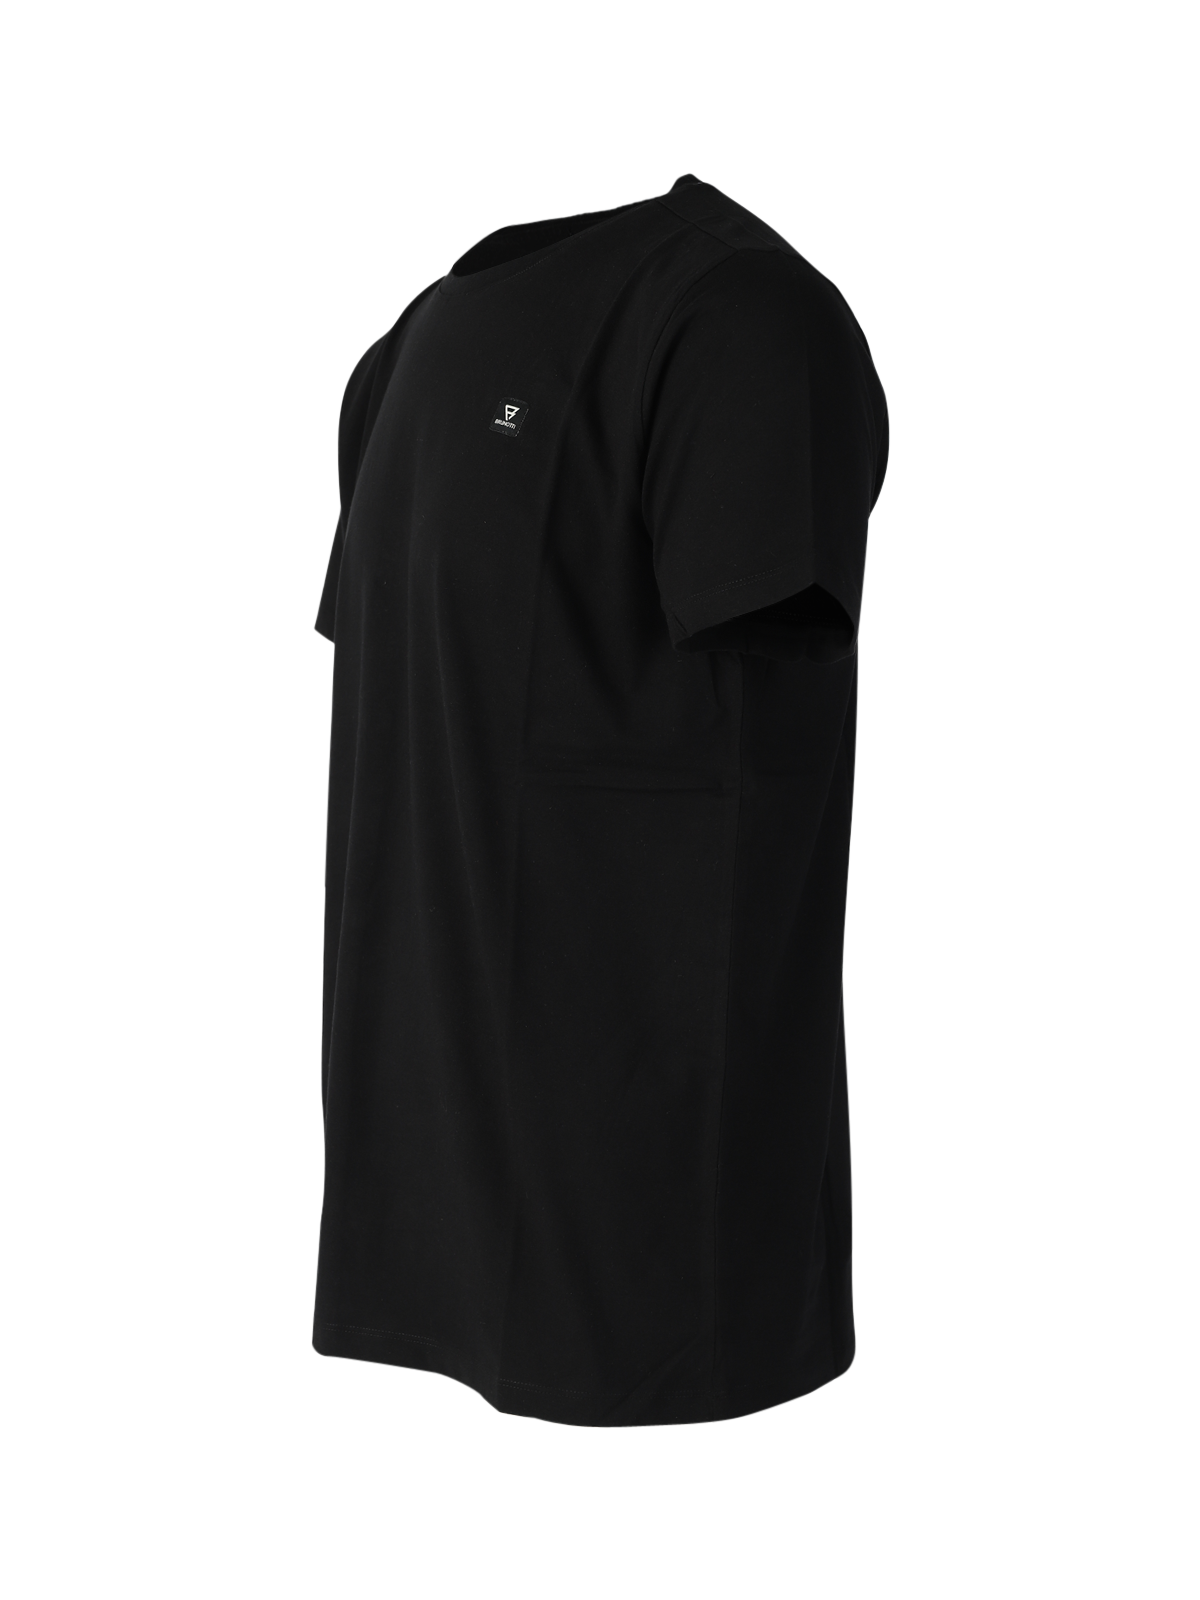 Axlon-R Herren T-Shirt | Schwarz